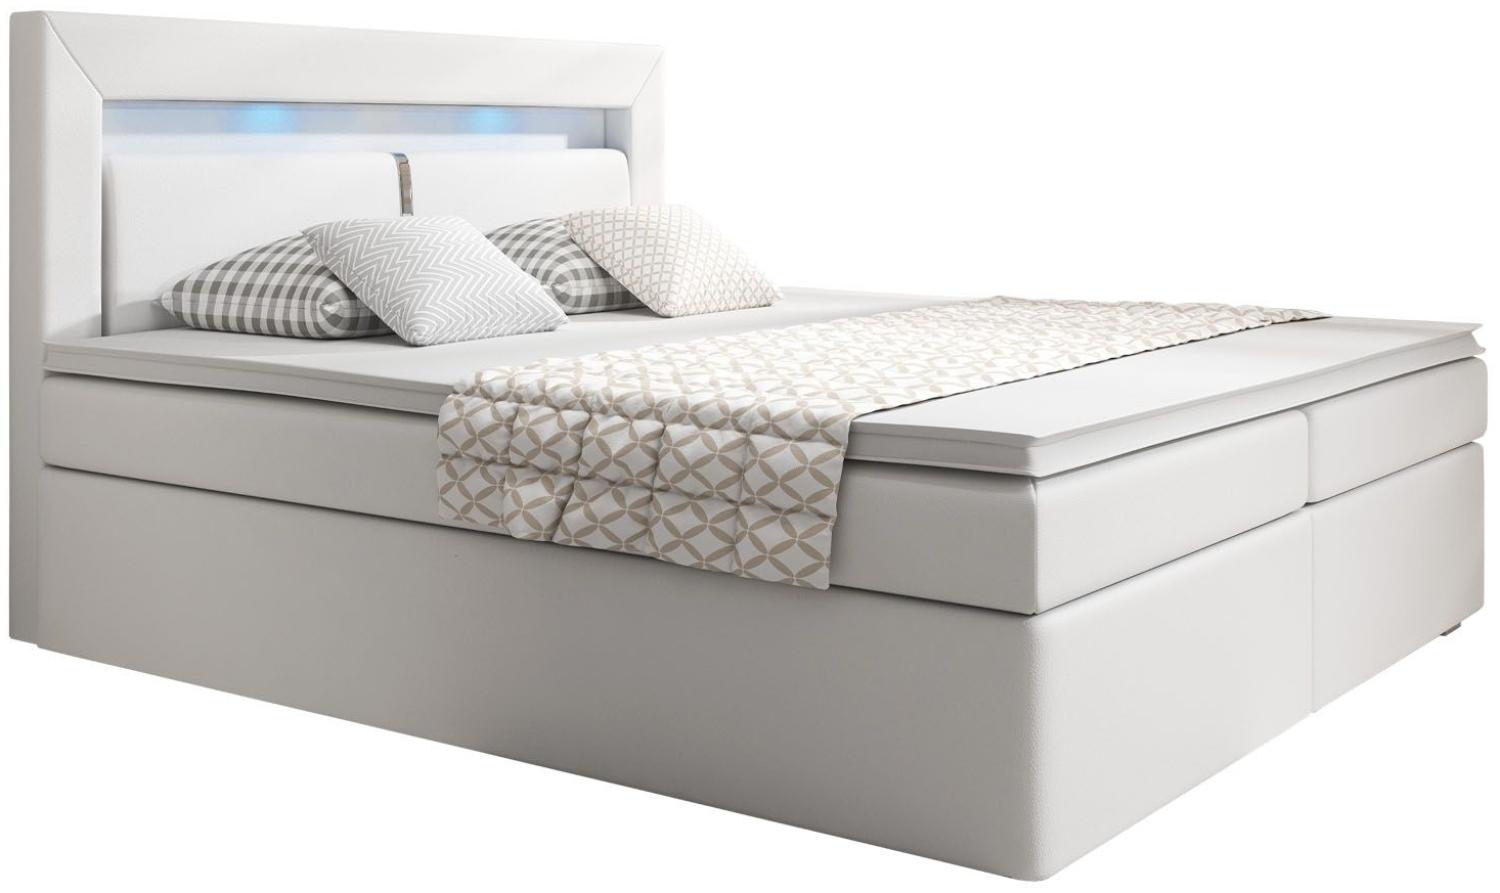 Juskys Boxspringbett New Jersey 180 x 200 cm mit Bettkästen, LED Beleuchtung, Bonell-Matratzen, Topper & Kunstleder - weiß – Bett Doppelbett Bild 1